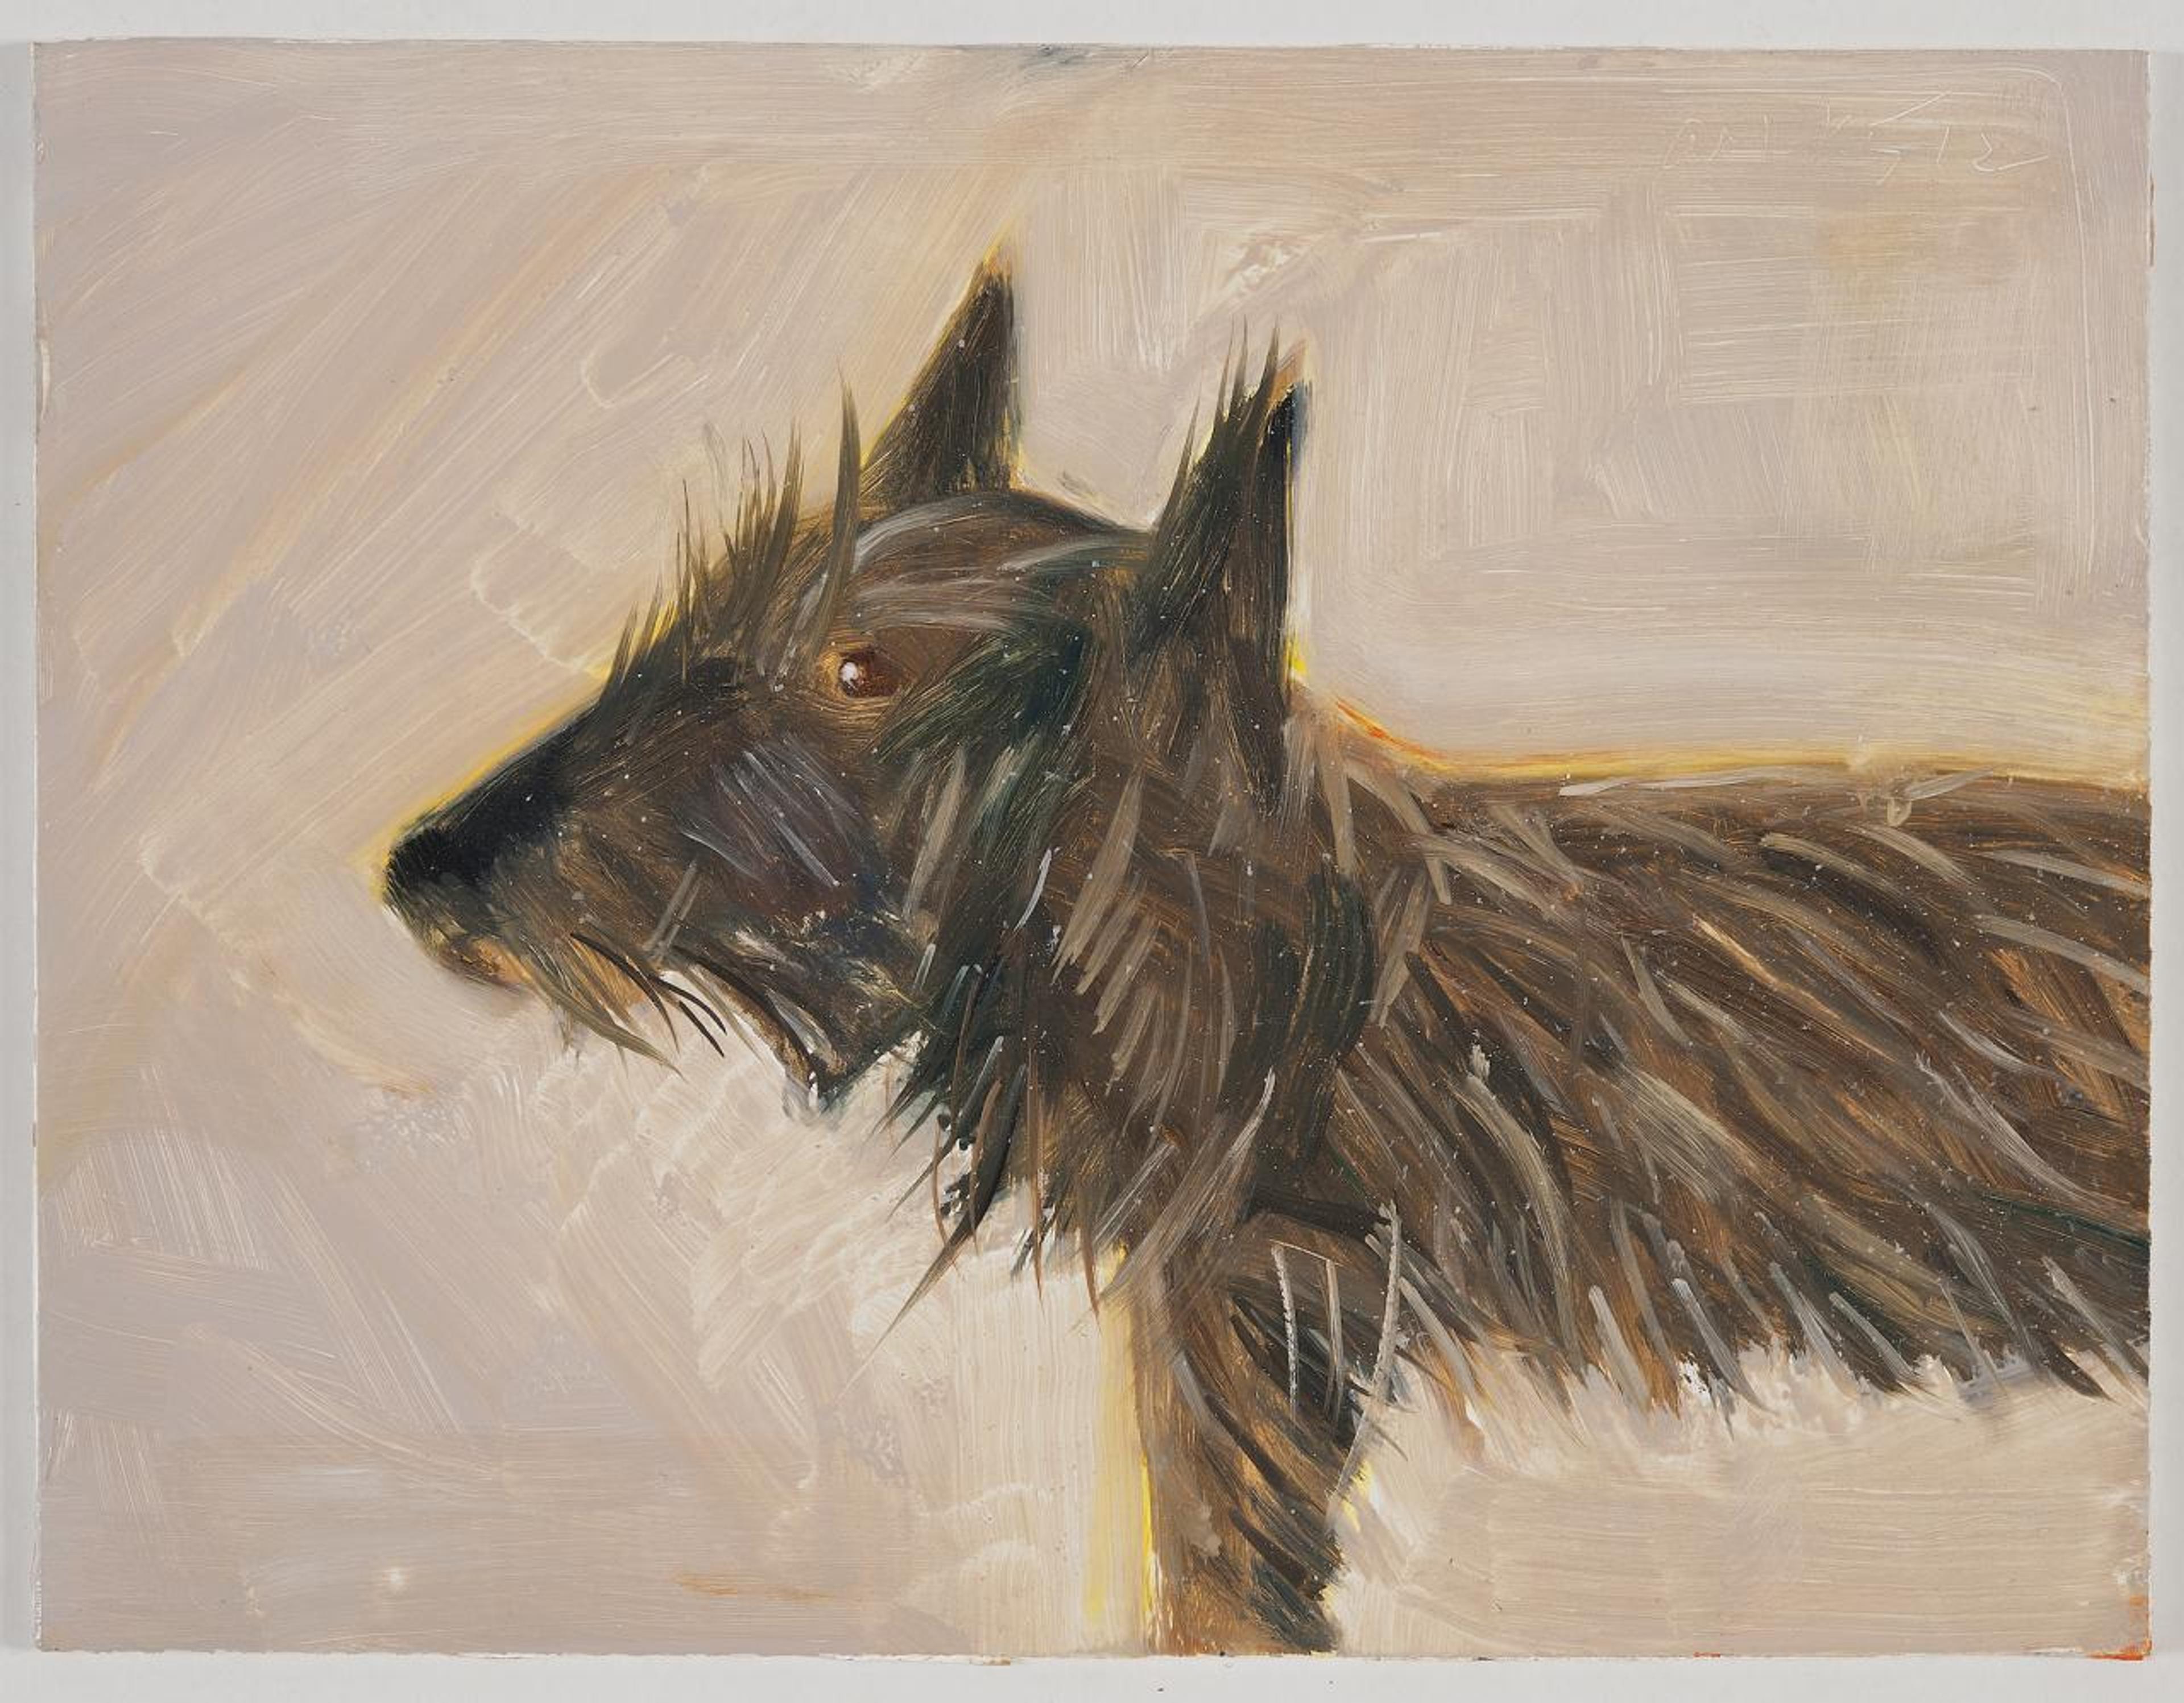 Alex Katz, Untitled (Dog), 2012 Oil on board, 22,9 x 30,5 cm, Copyright Alex Katz / VG Bild-Kunst, Bonn 2019, Courtesy Galerie Klueser